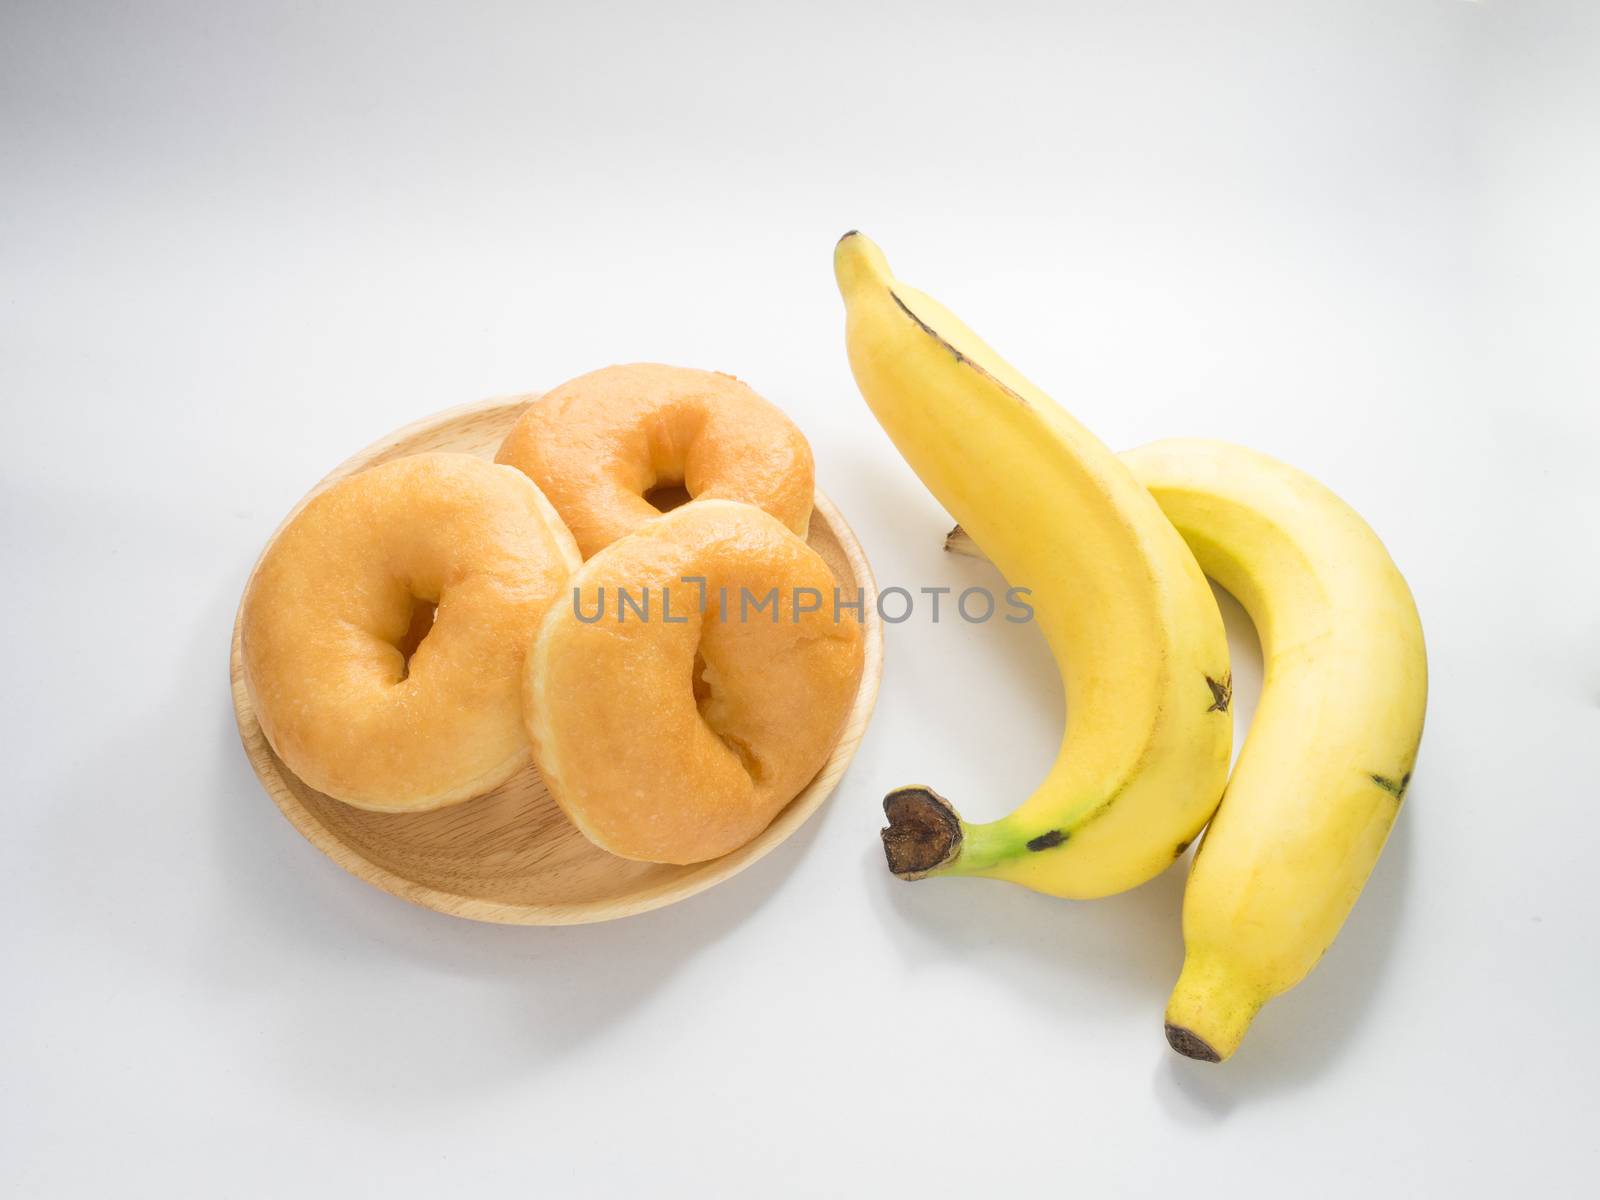 classic donuts and banana, choose healthy